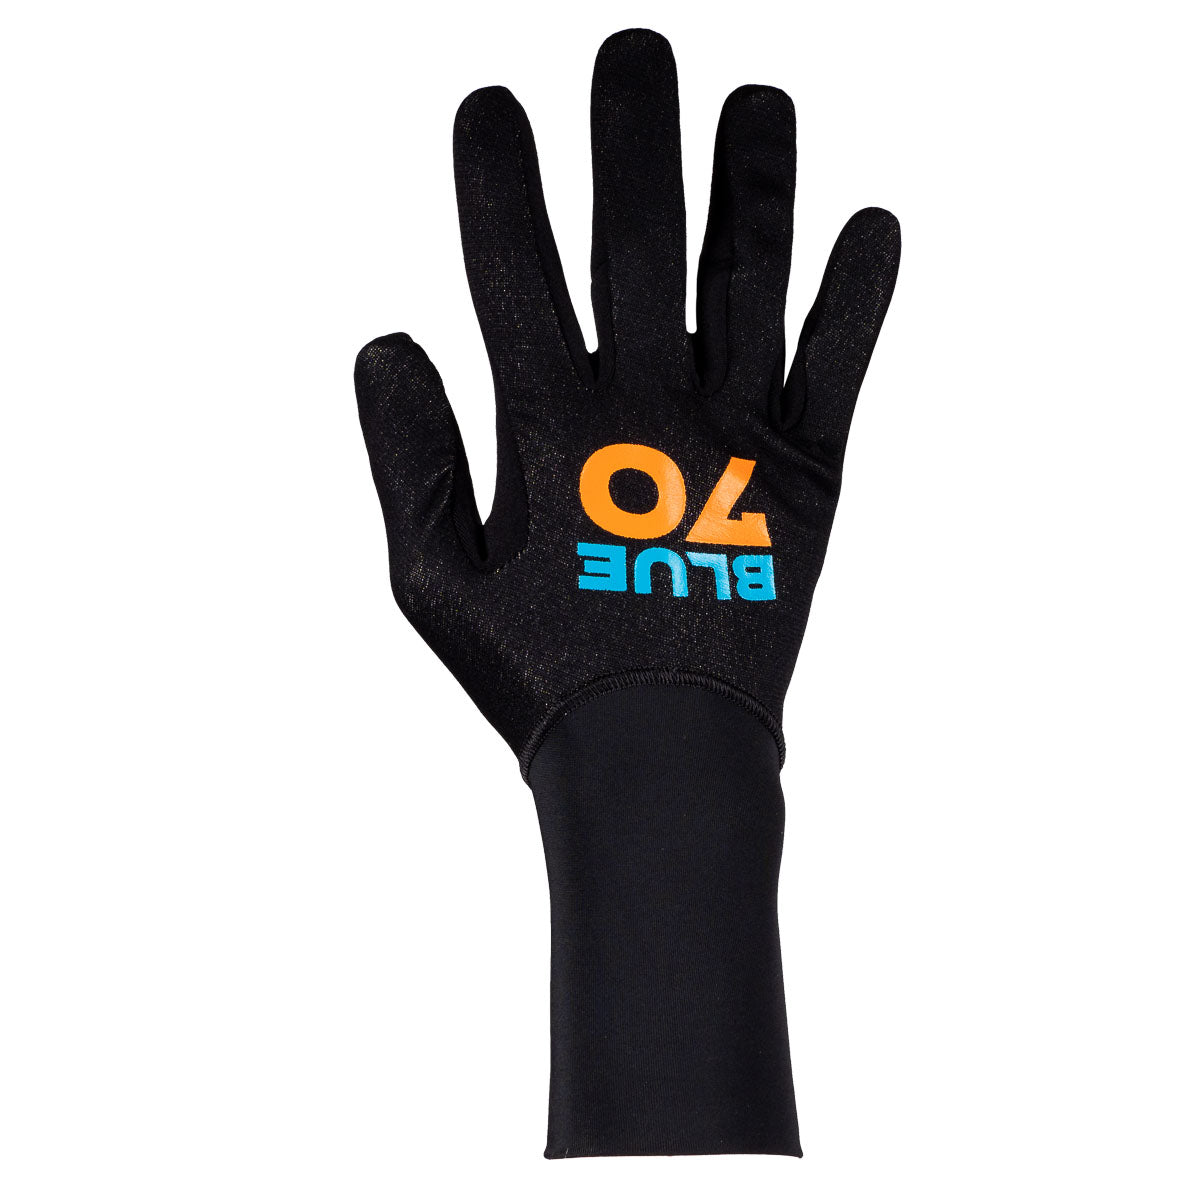 BlueHeat® Heat Resistant Gloves - The Glove Company - Australia